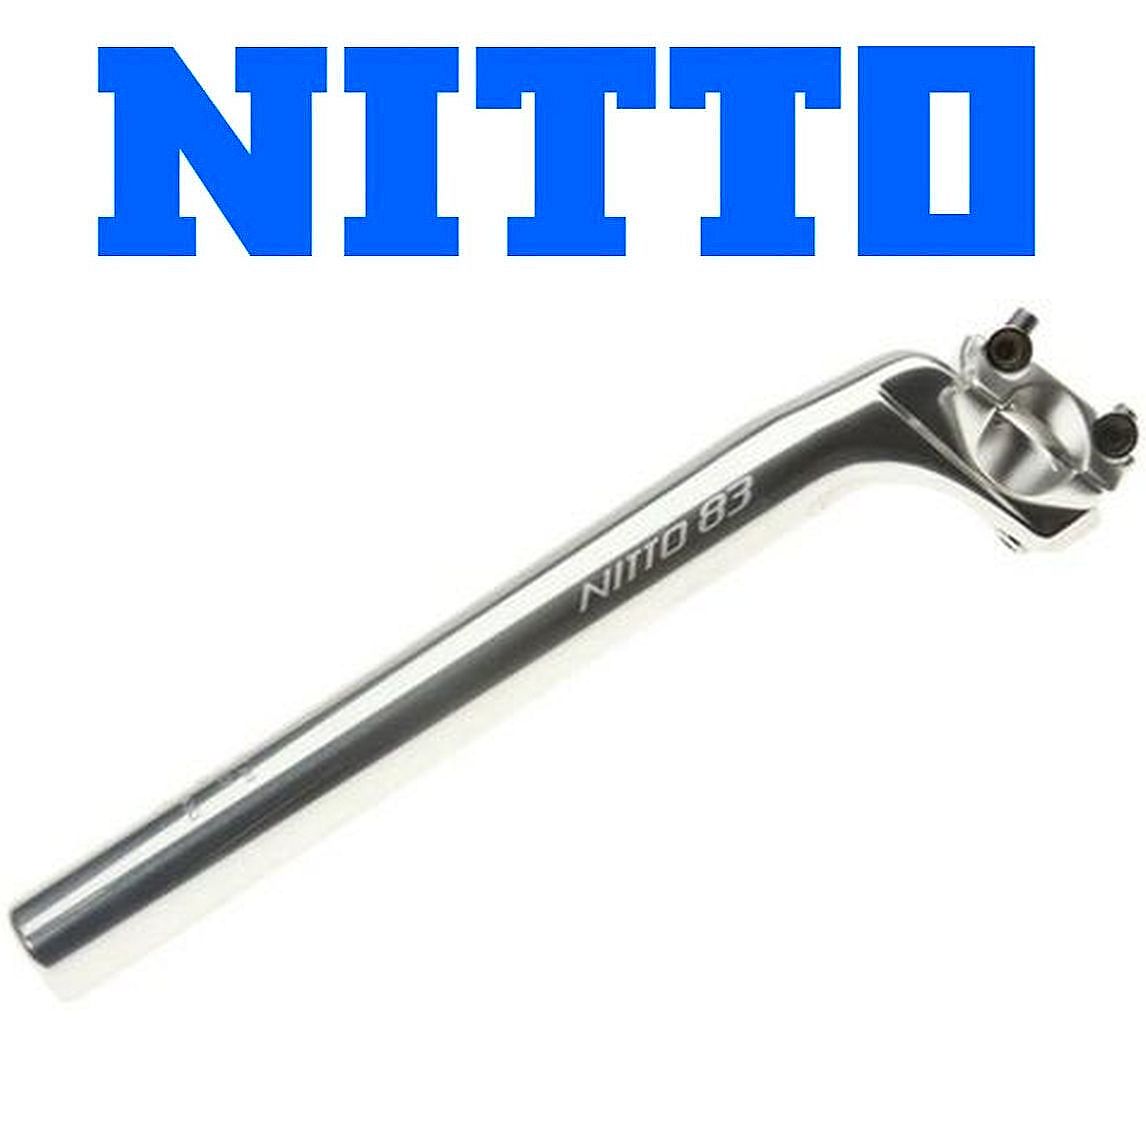 Nitto S-83 2-bolt 27.2 Seatpost - The Bikesmiths